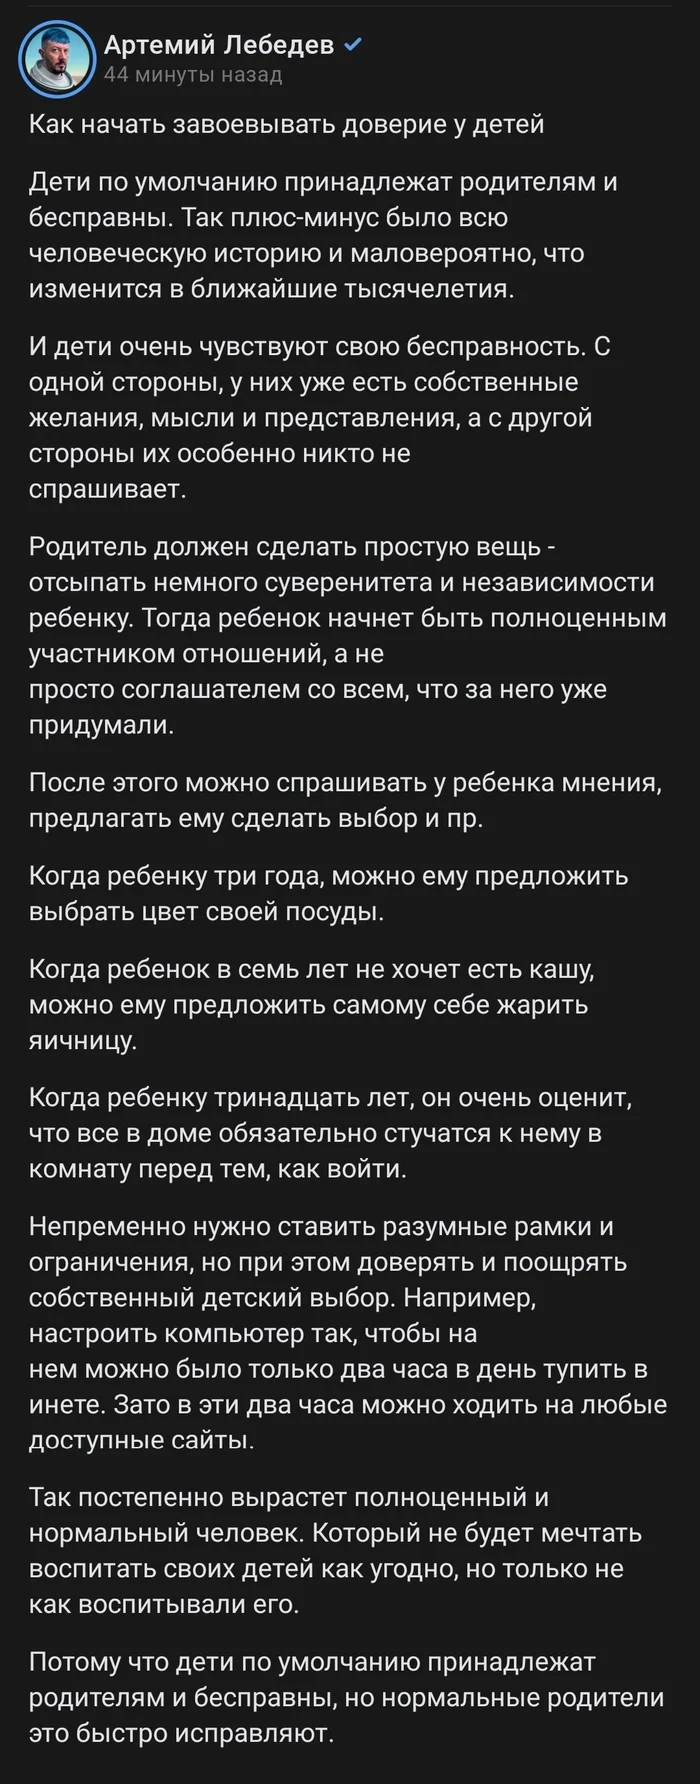 About trust - Artemy Lebedev, Screenshot, Parents and children, Parenting, Confidence, Longpost